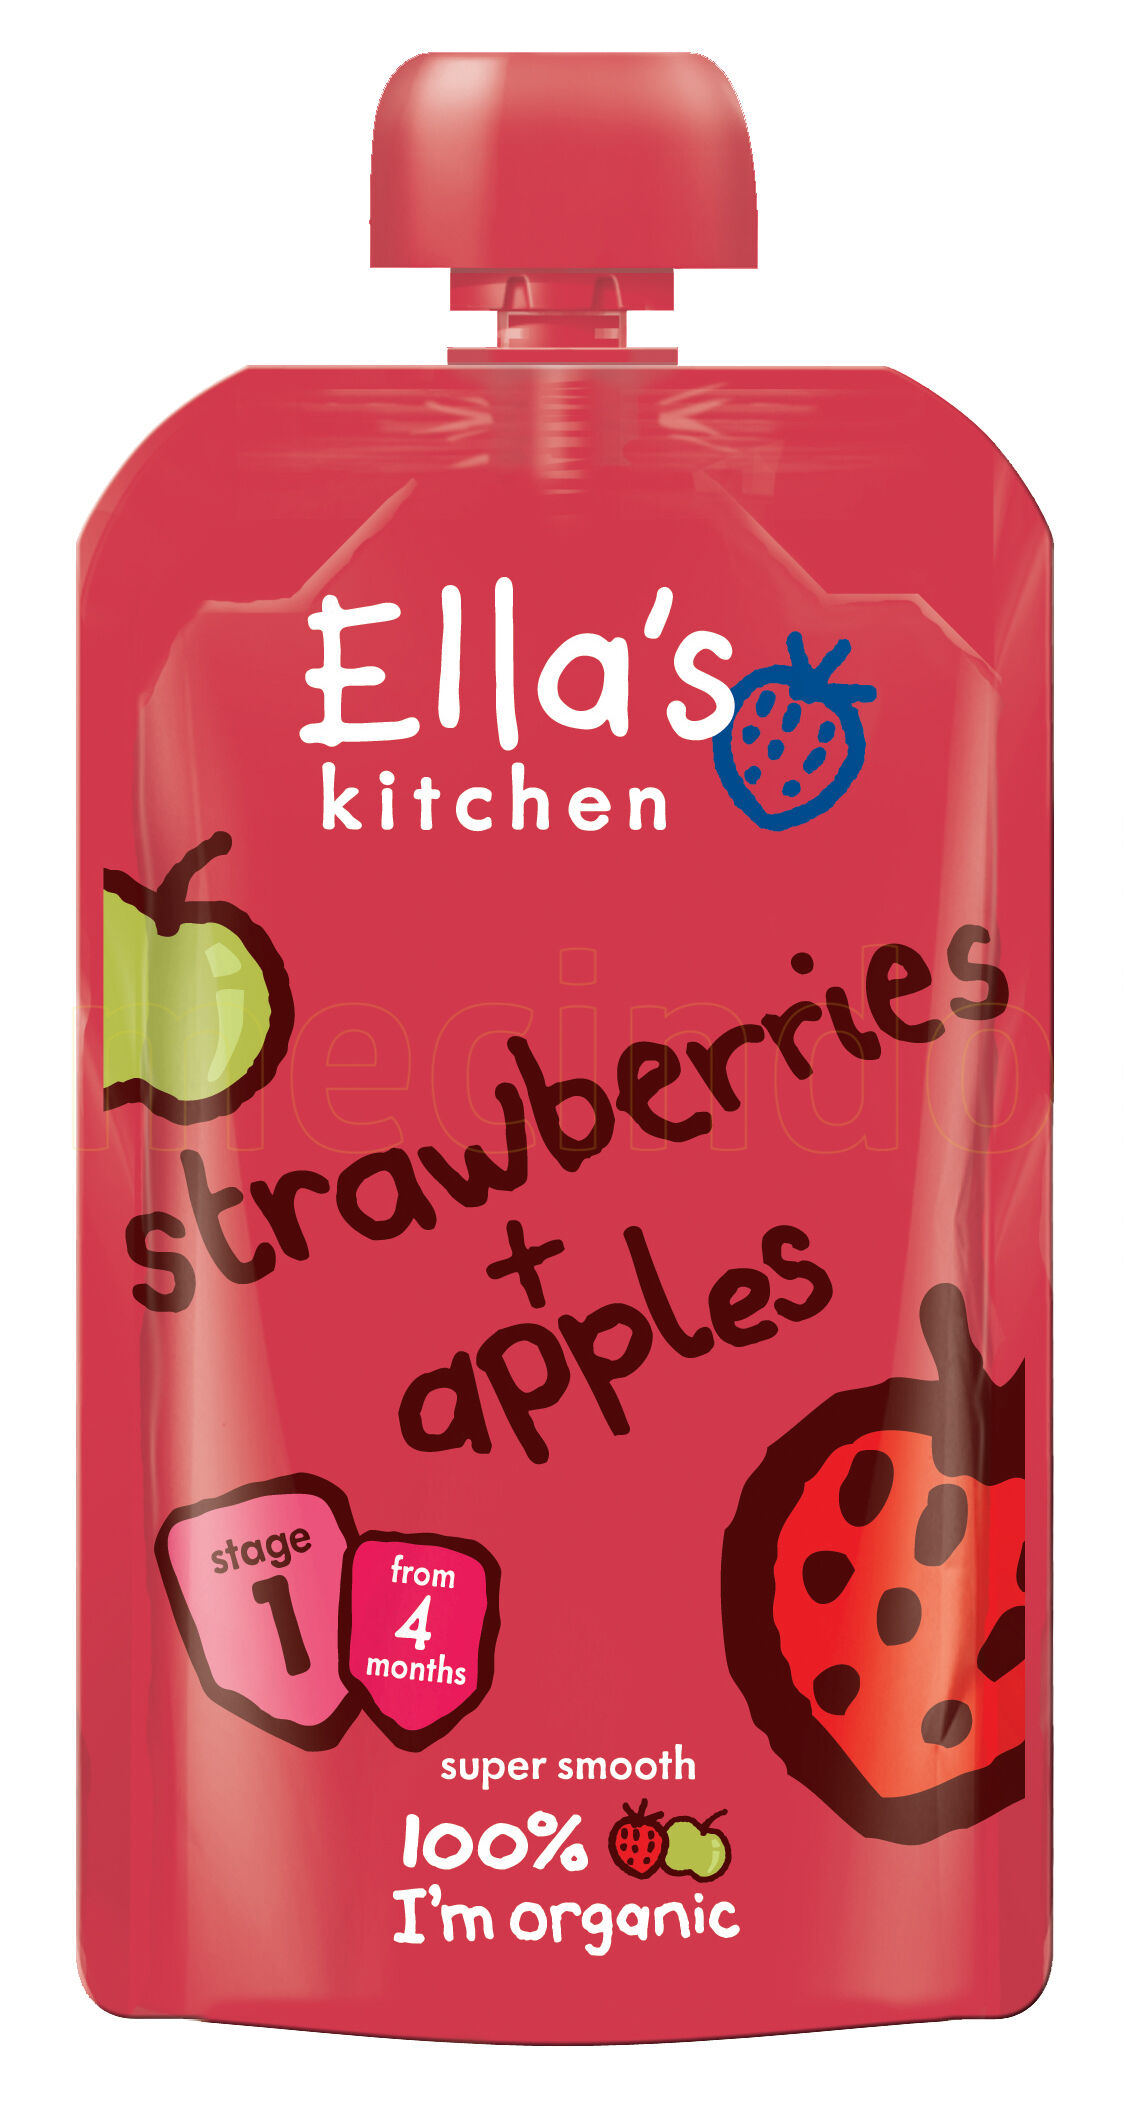 Ellas Kitchen S1 Jordbær og Eple 4 mnd+ - 120 Gram